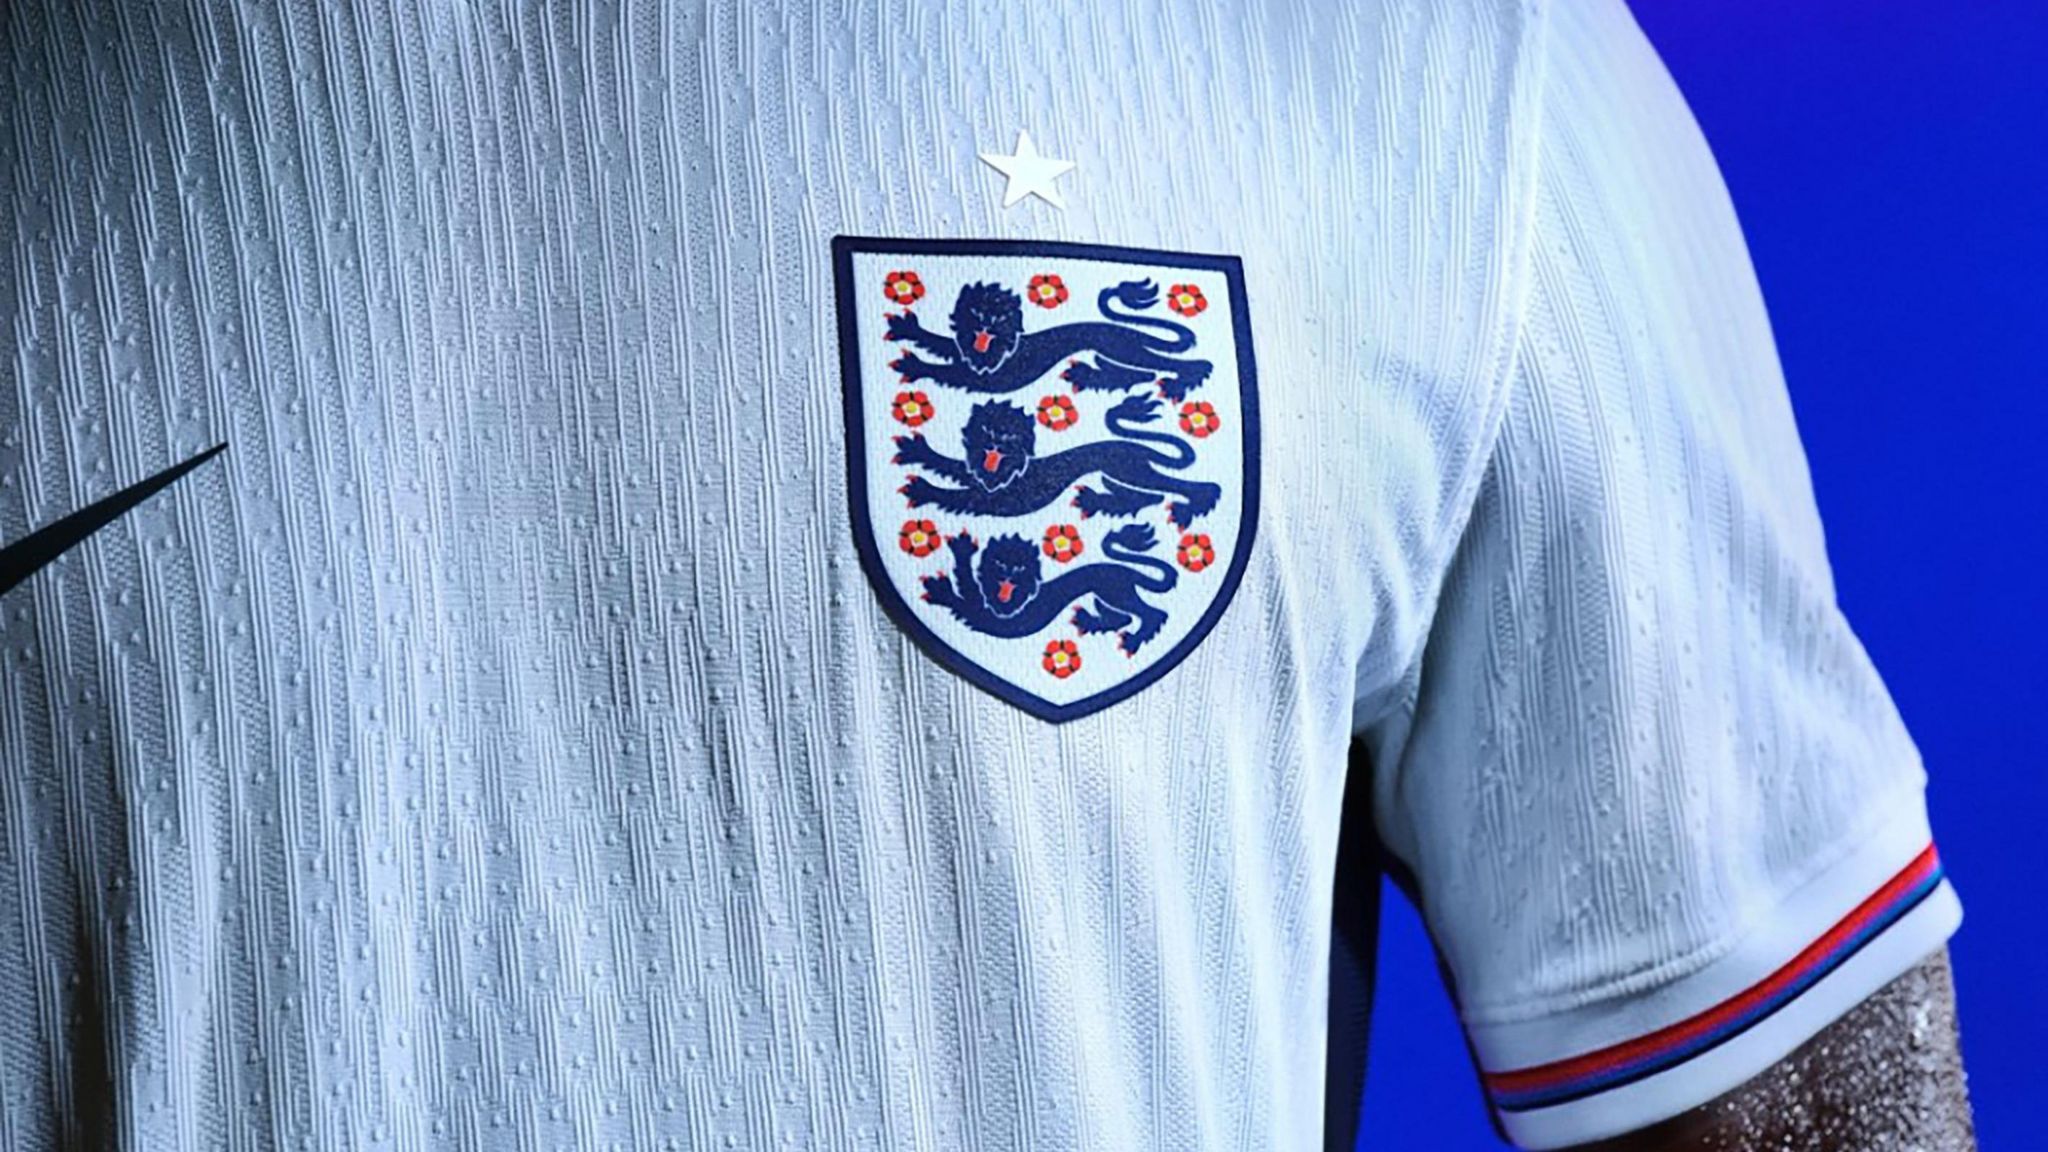 England's three lions on kit